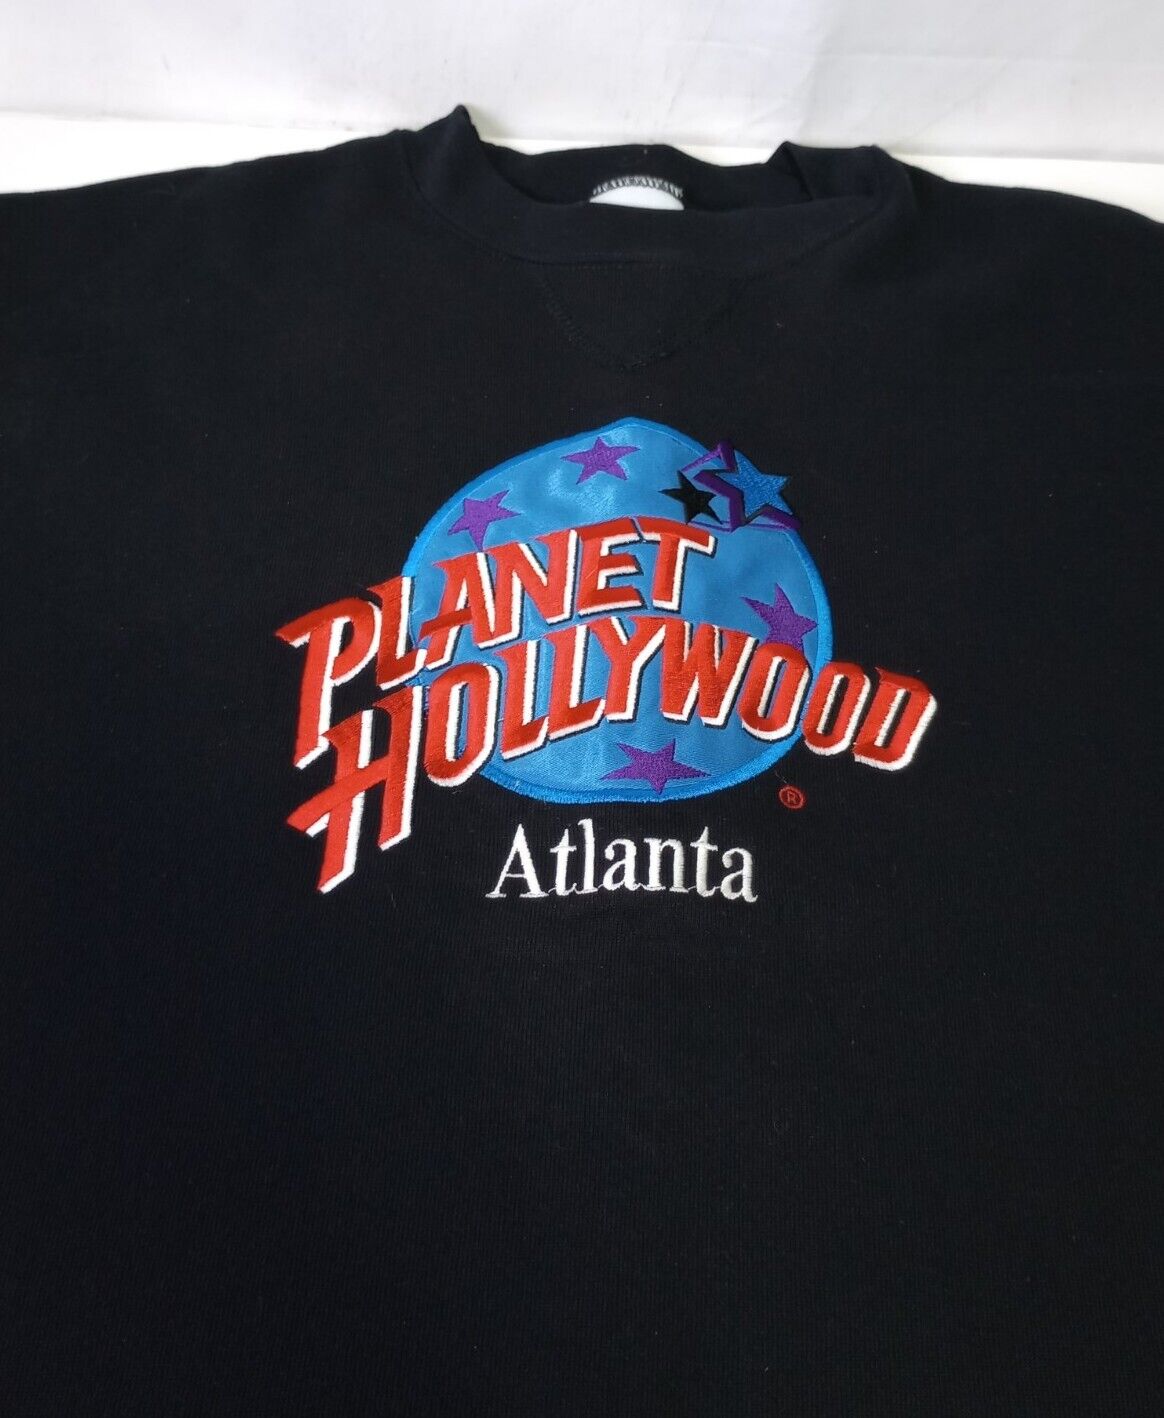 VTG 90s Planet Hollywood Atlanta Sweatshirt Black Sz XL Embroidered Made USA